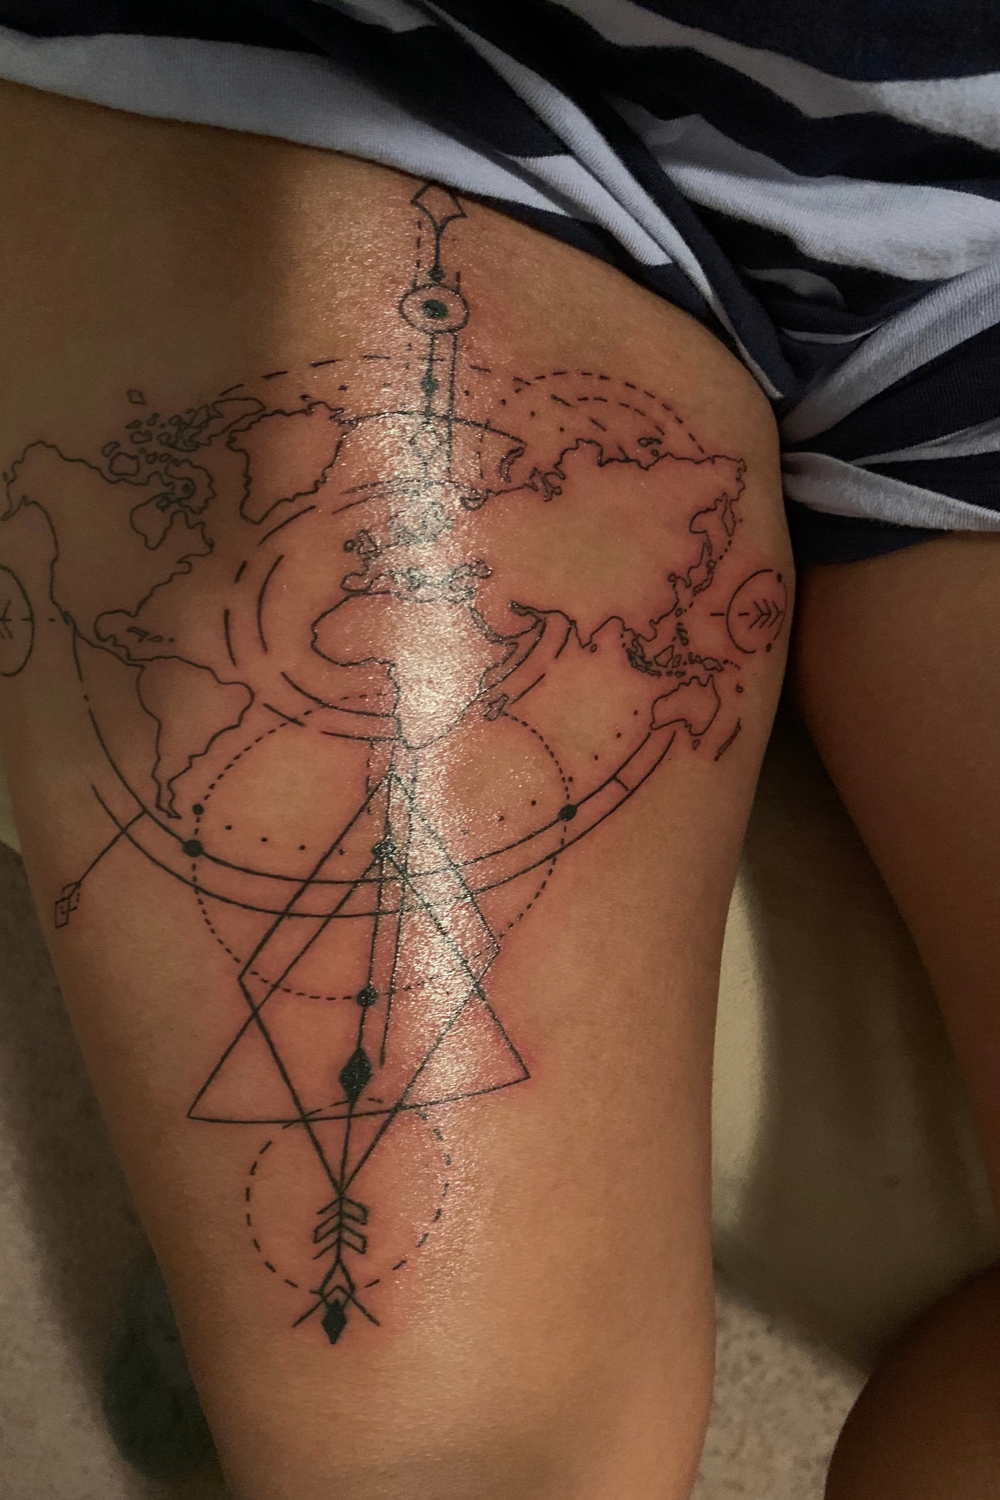 Travel The Globe – Why I Got This Tattoo